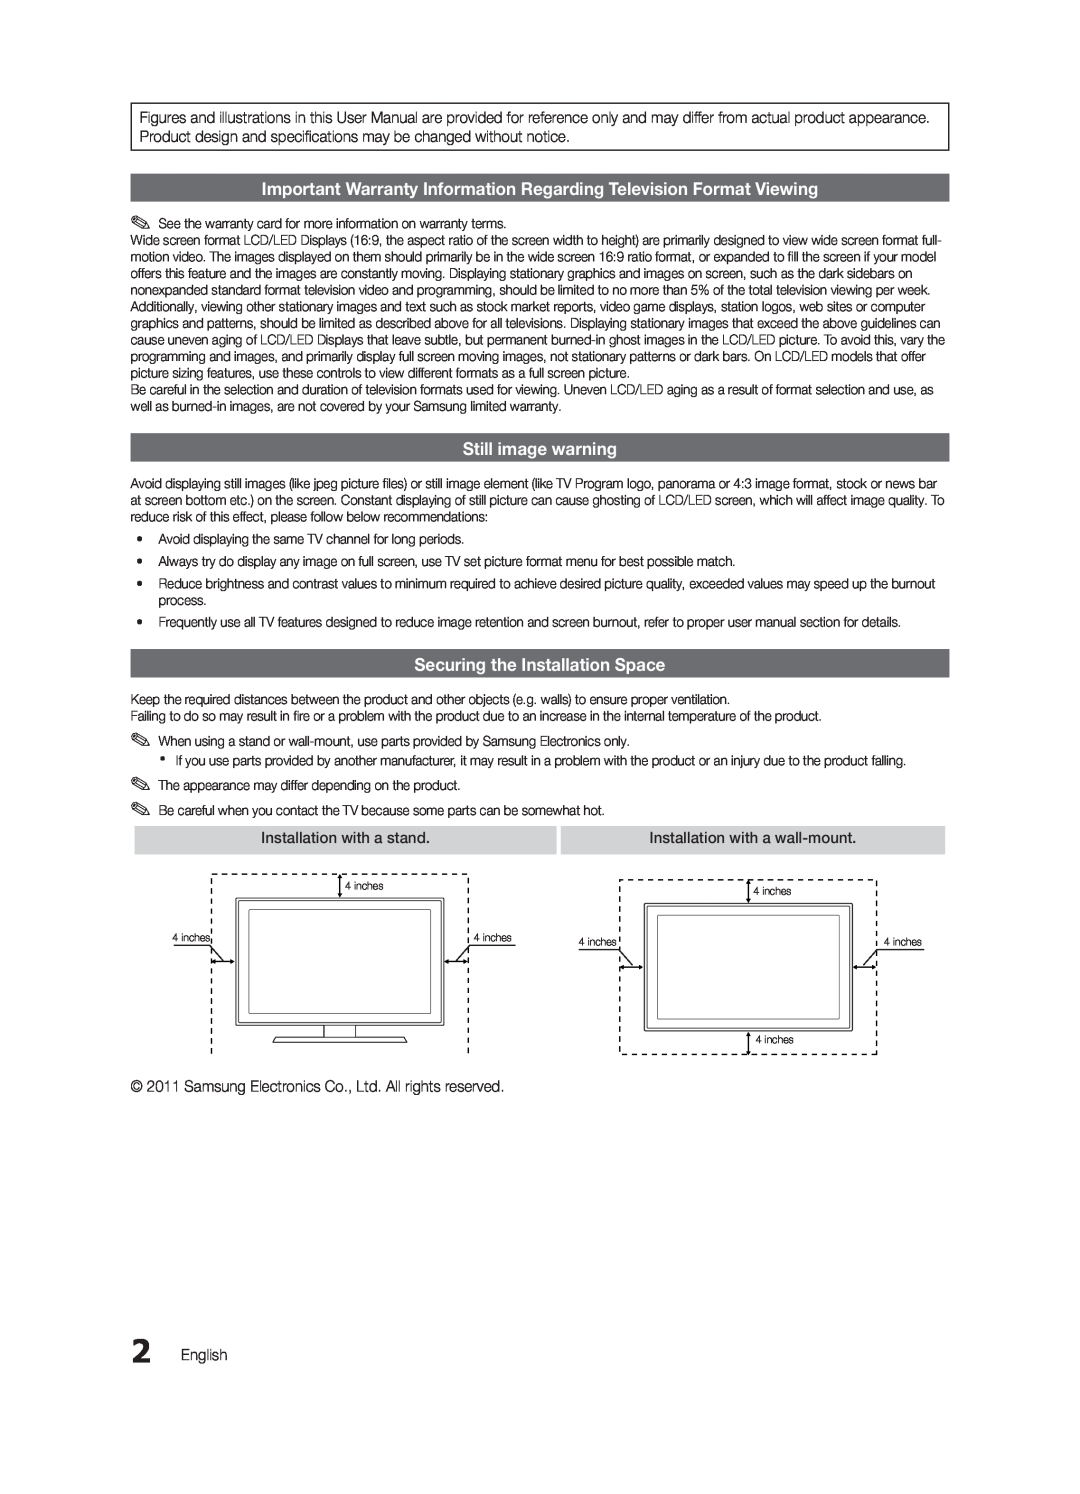 Samsung UN19D4003 Important Warranty Information Regarding Television Format Viewing, Still image warning, English 